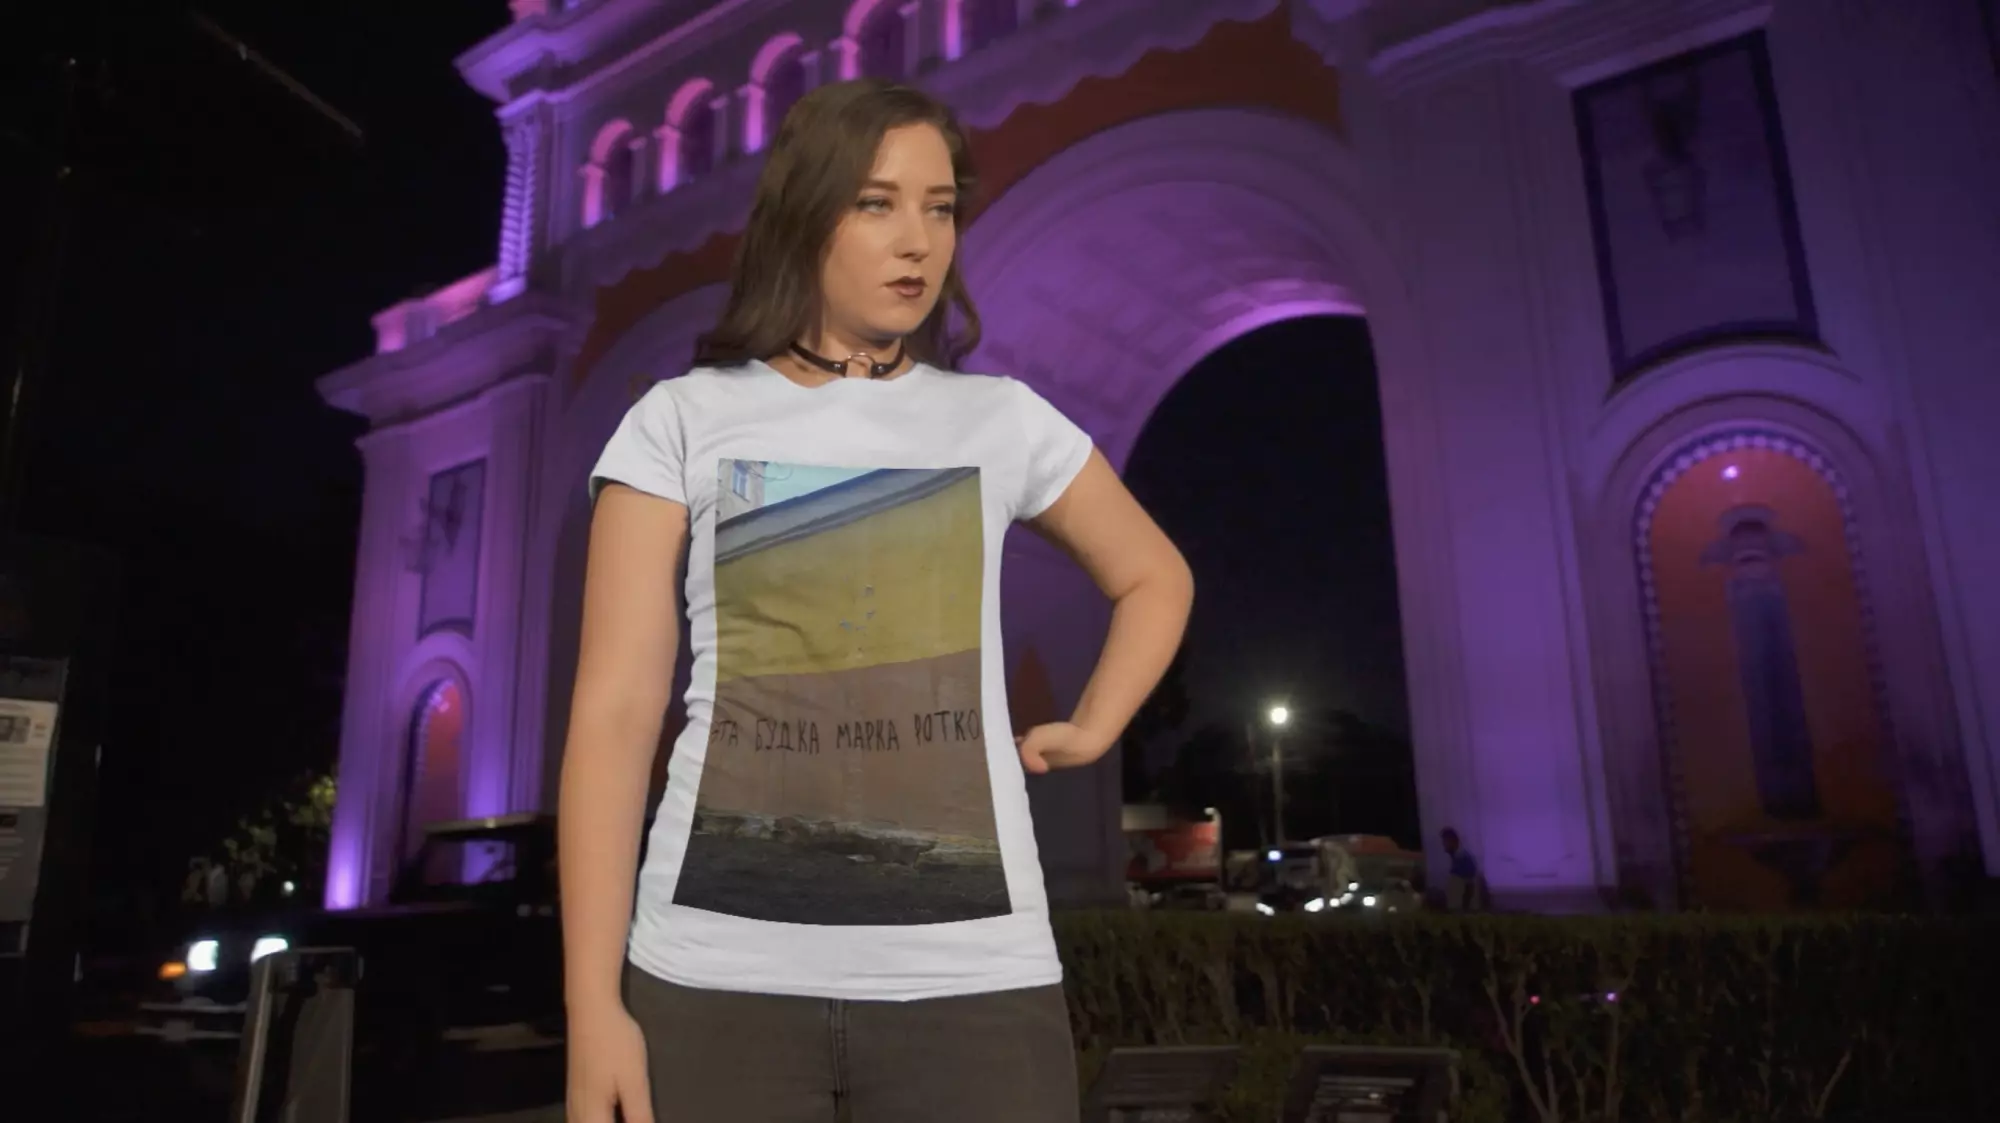 T-Shirt Mockup Video with Urban Night Setting